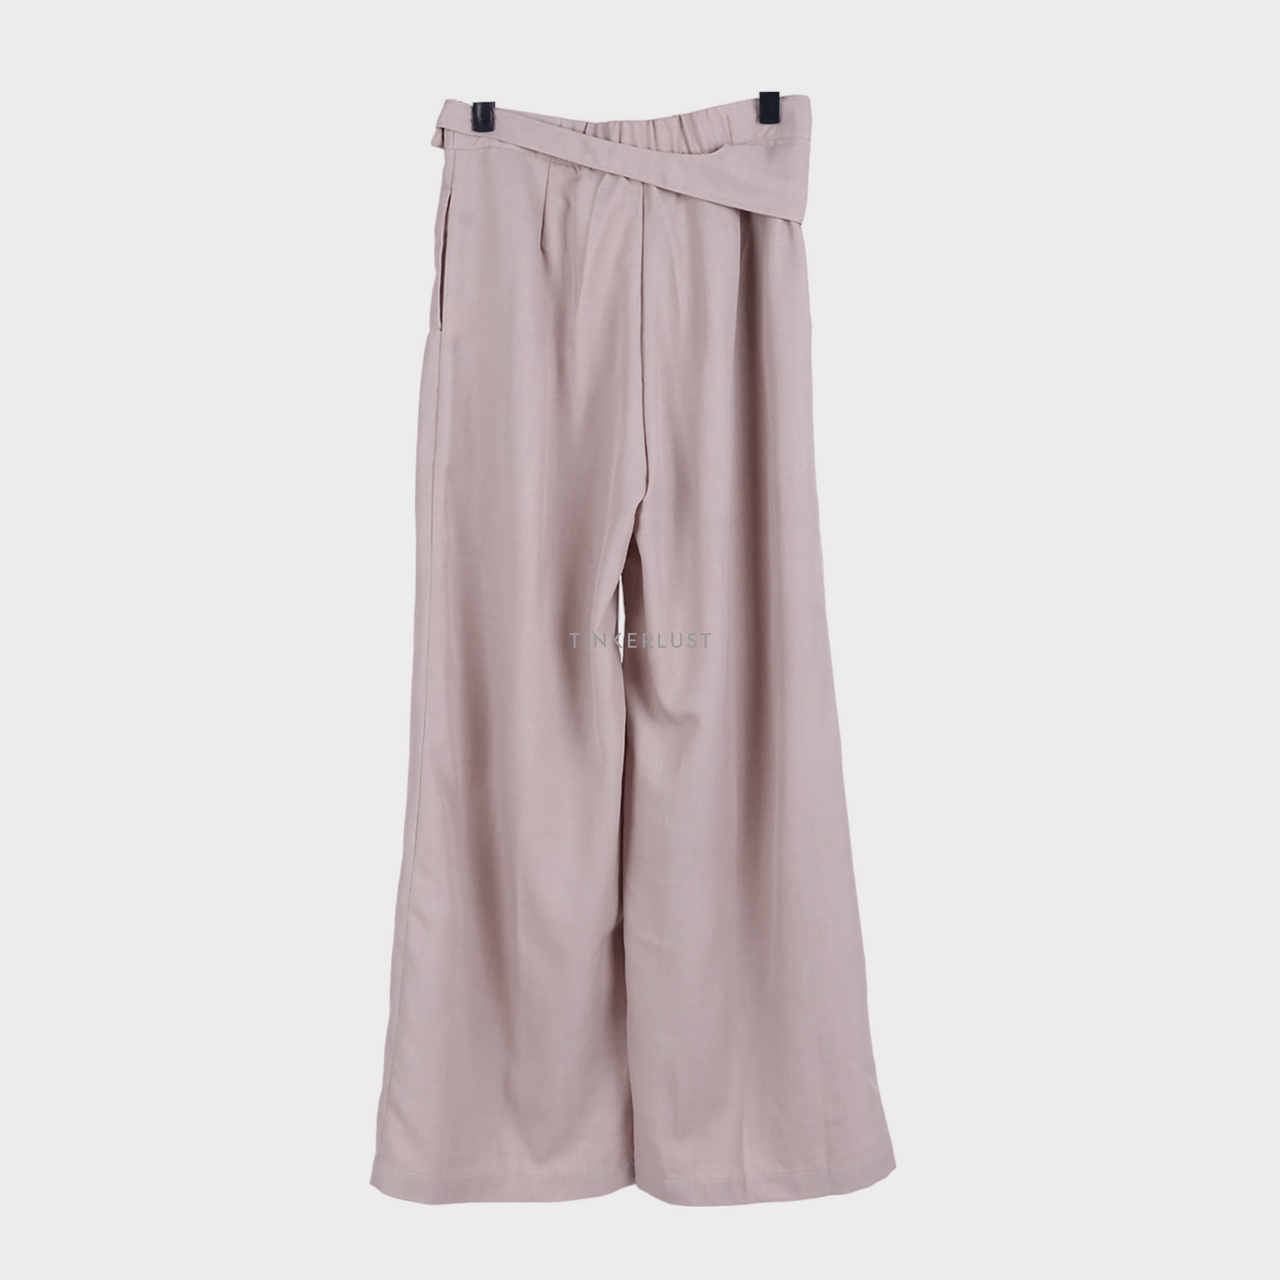 Private Collection Khaki Long Pants